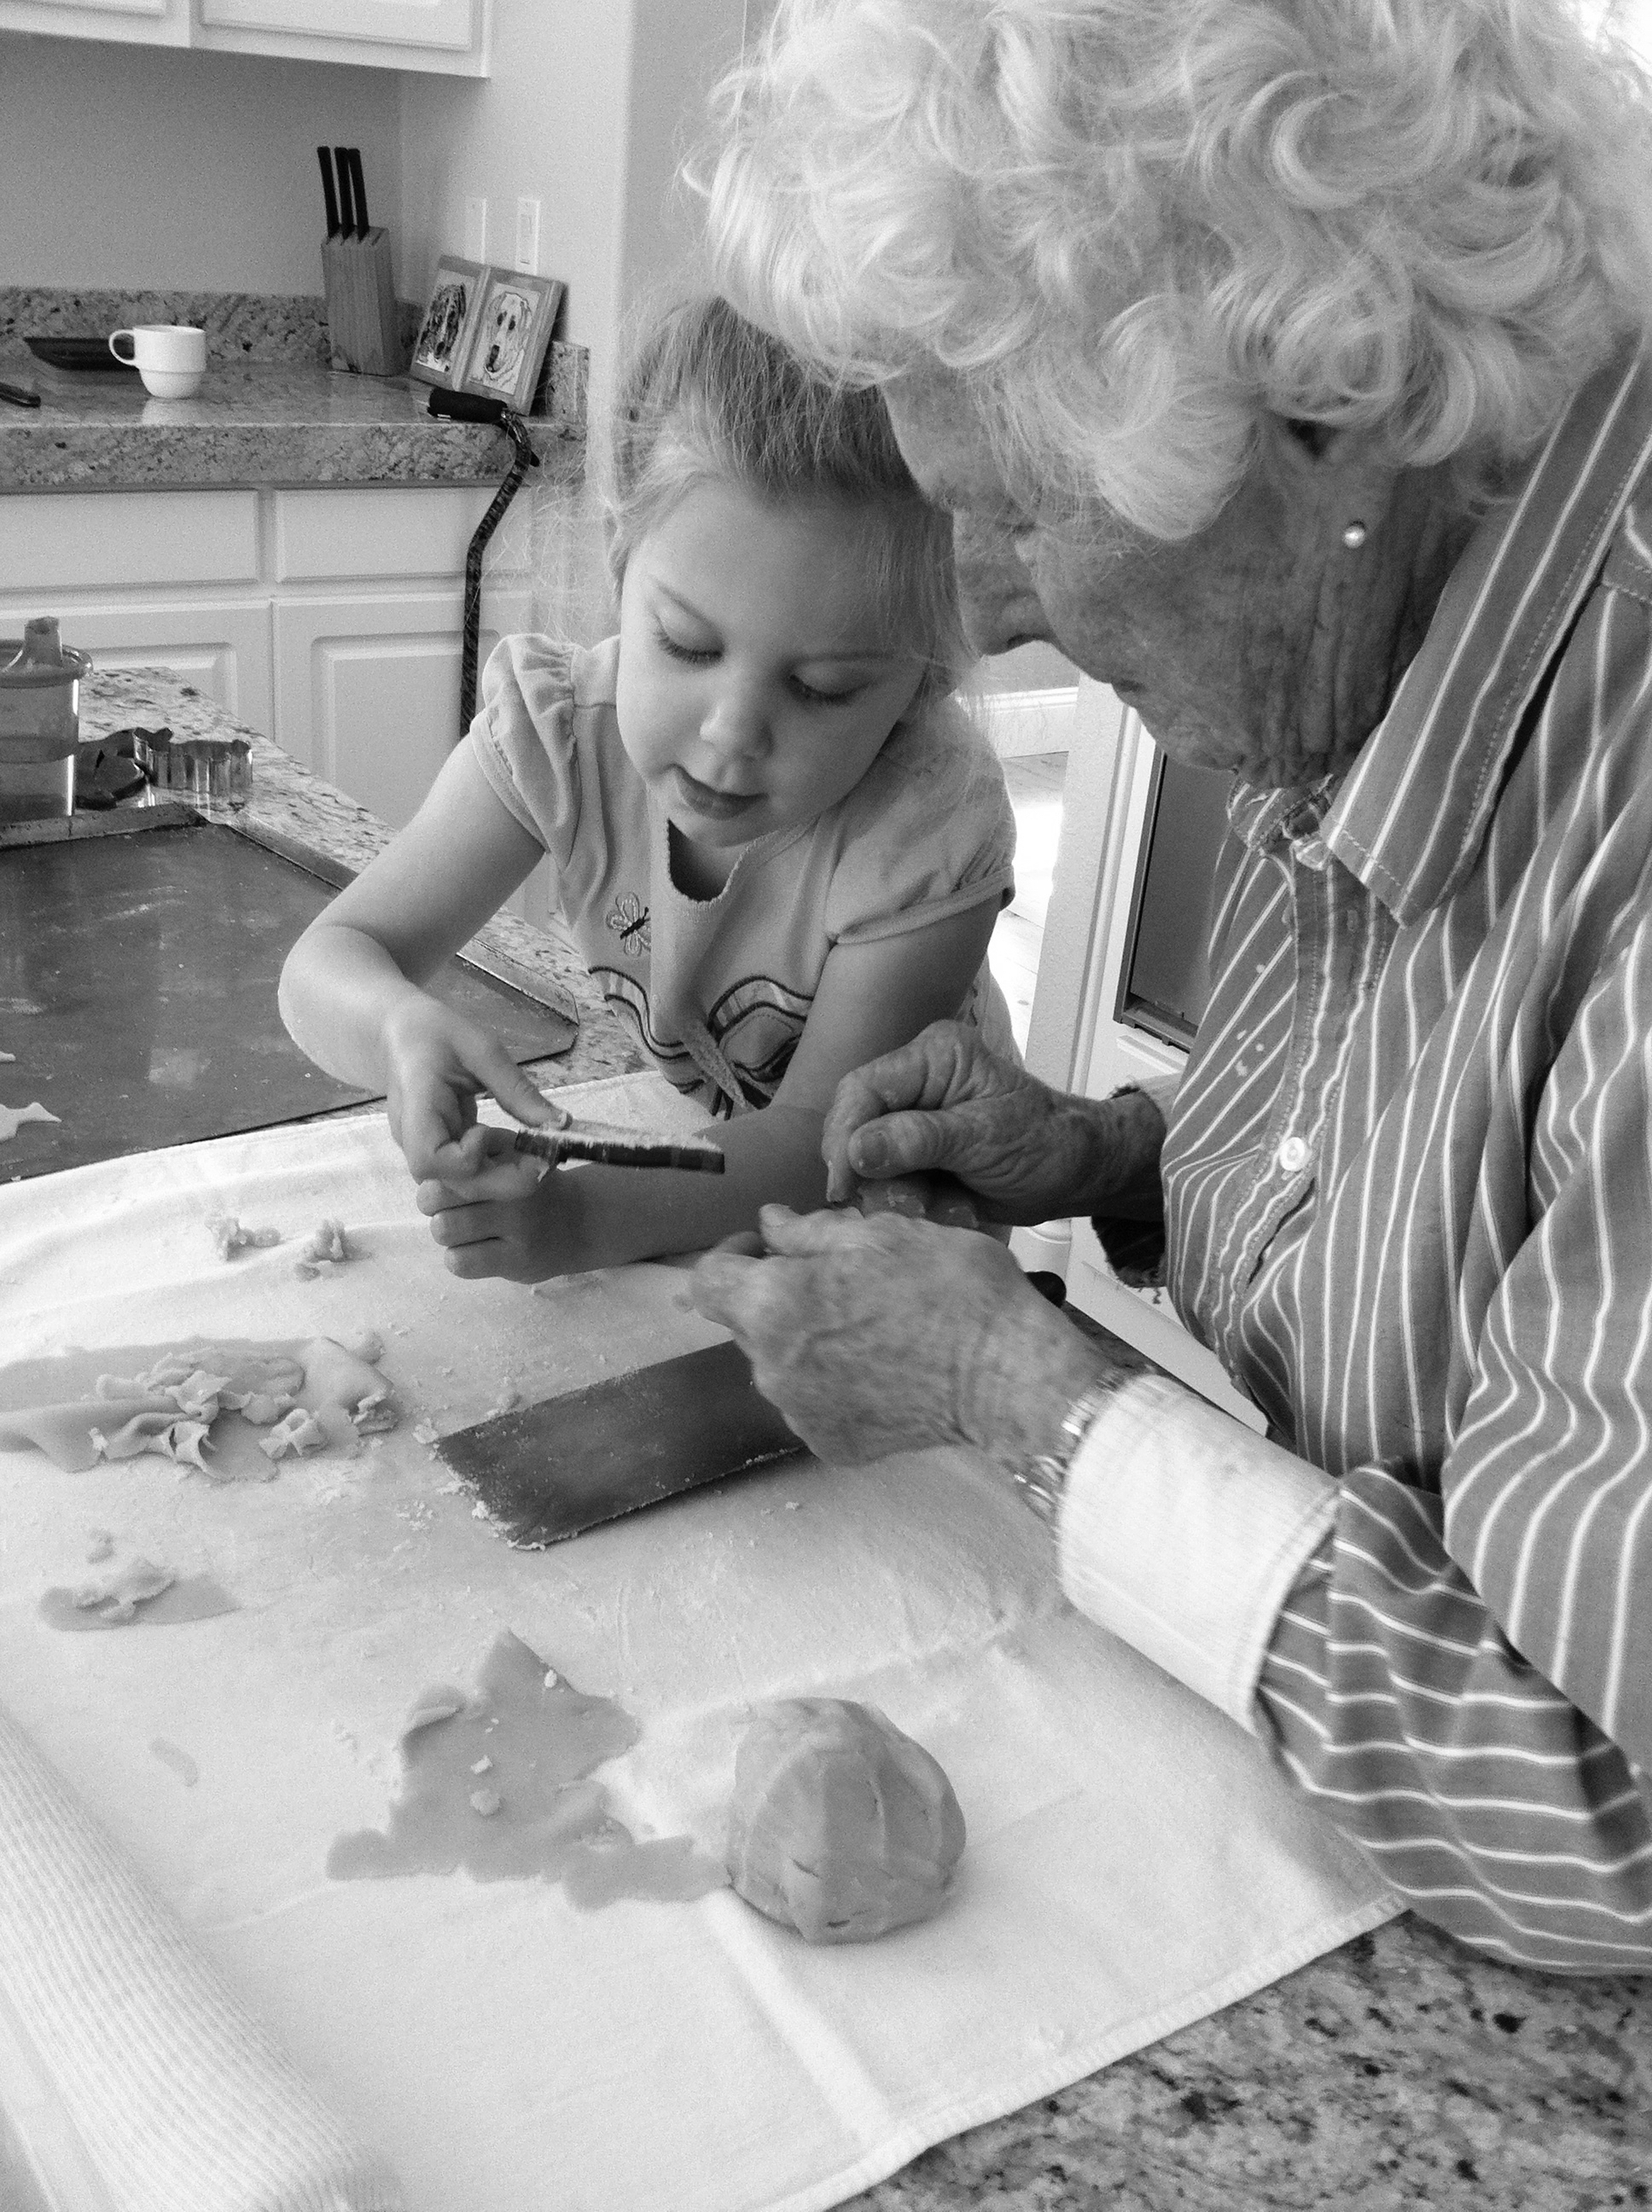 Grandmother and granddaughter baking cookies